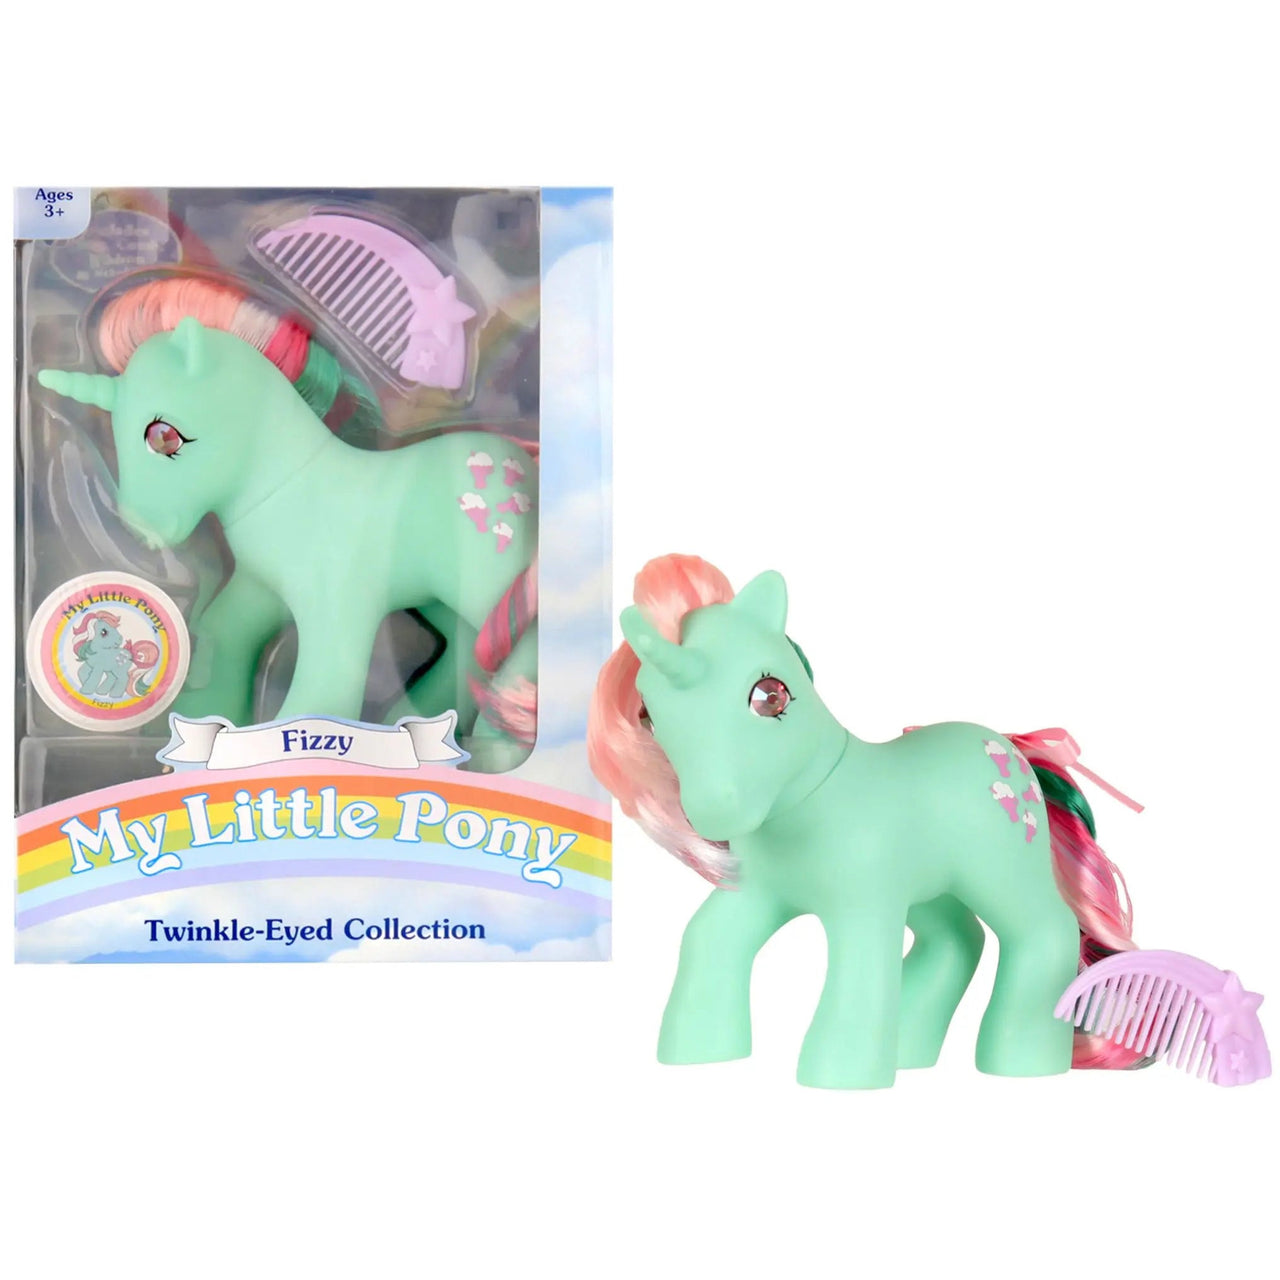 My Little Pony Classics Rainbow Ponies Fizzy My Little Pony